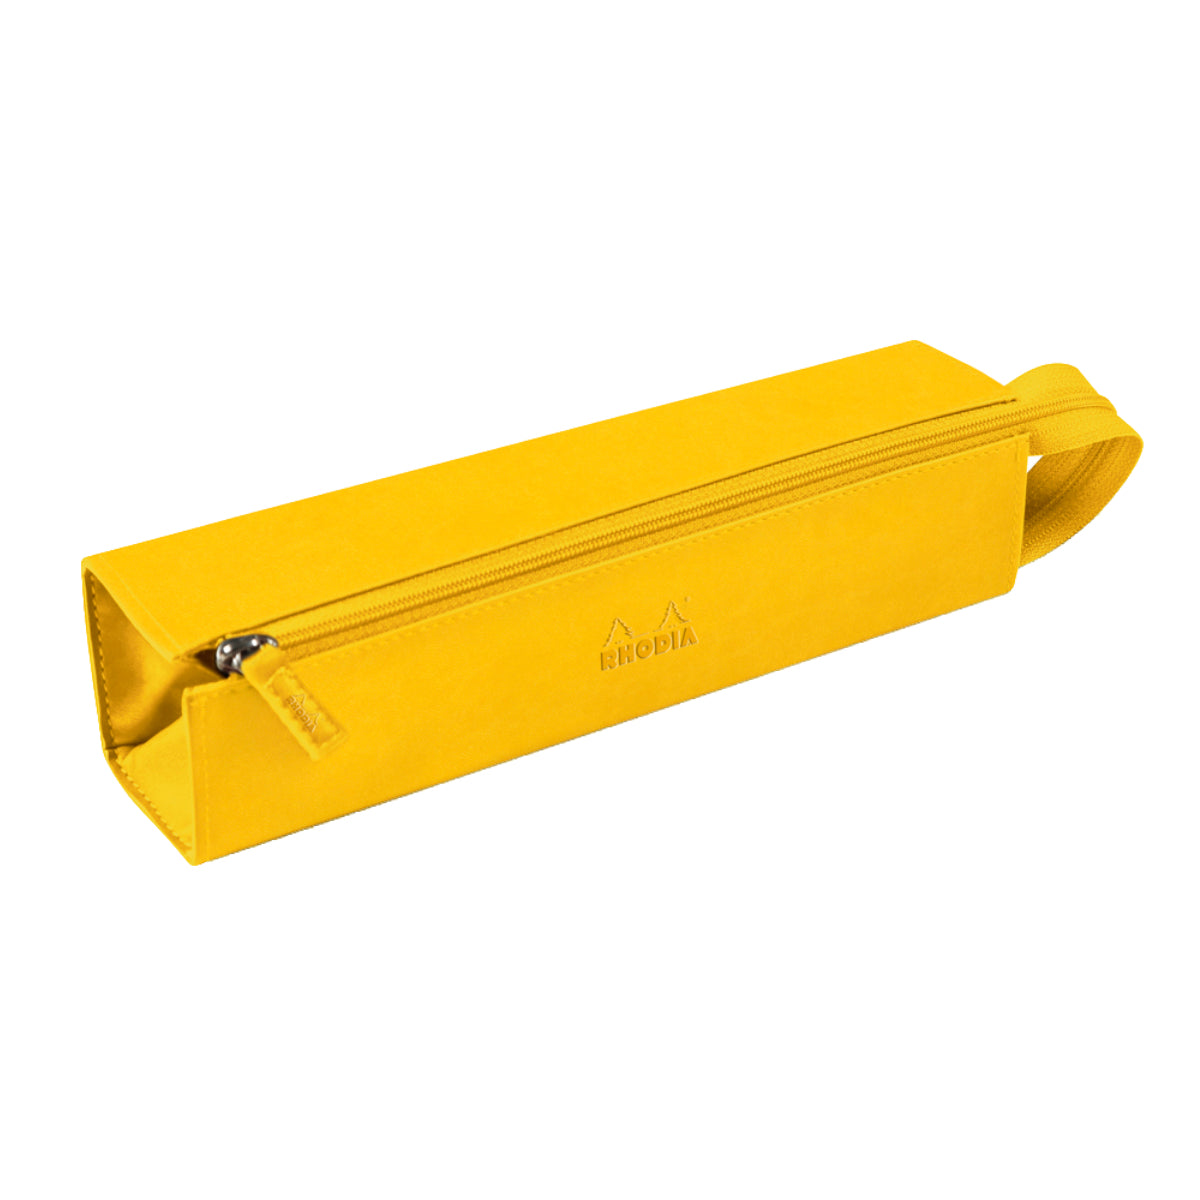 RHODIA rhodiarama Square Pencil Case with Zipper, PU Leather, 230 x 50 mm, Yellow